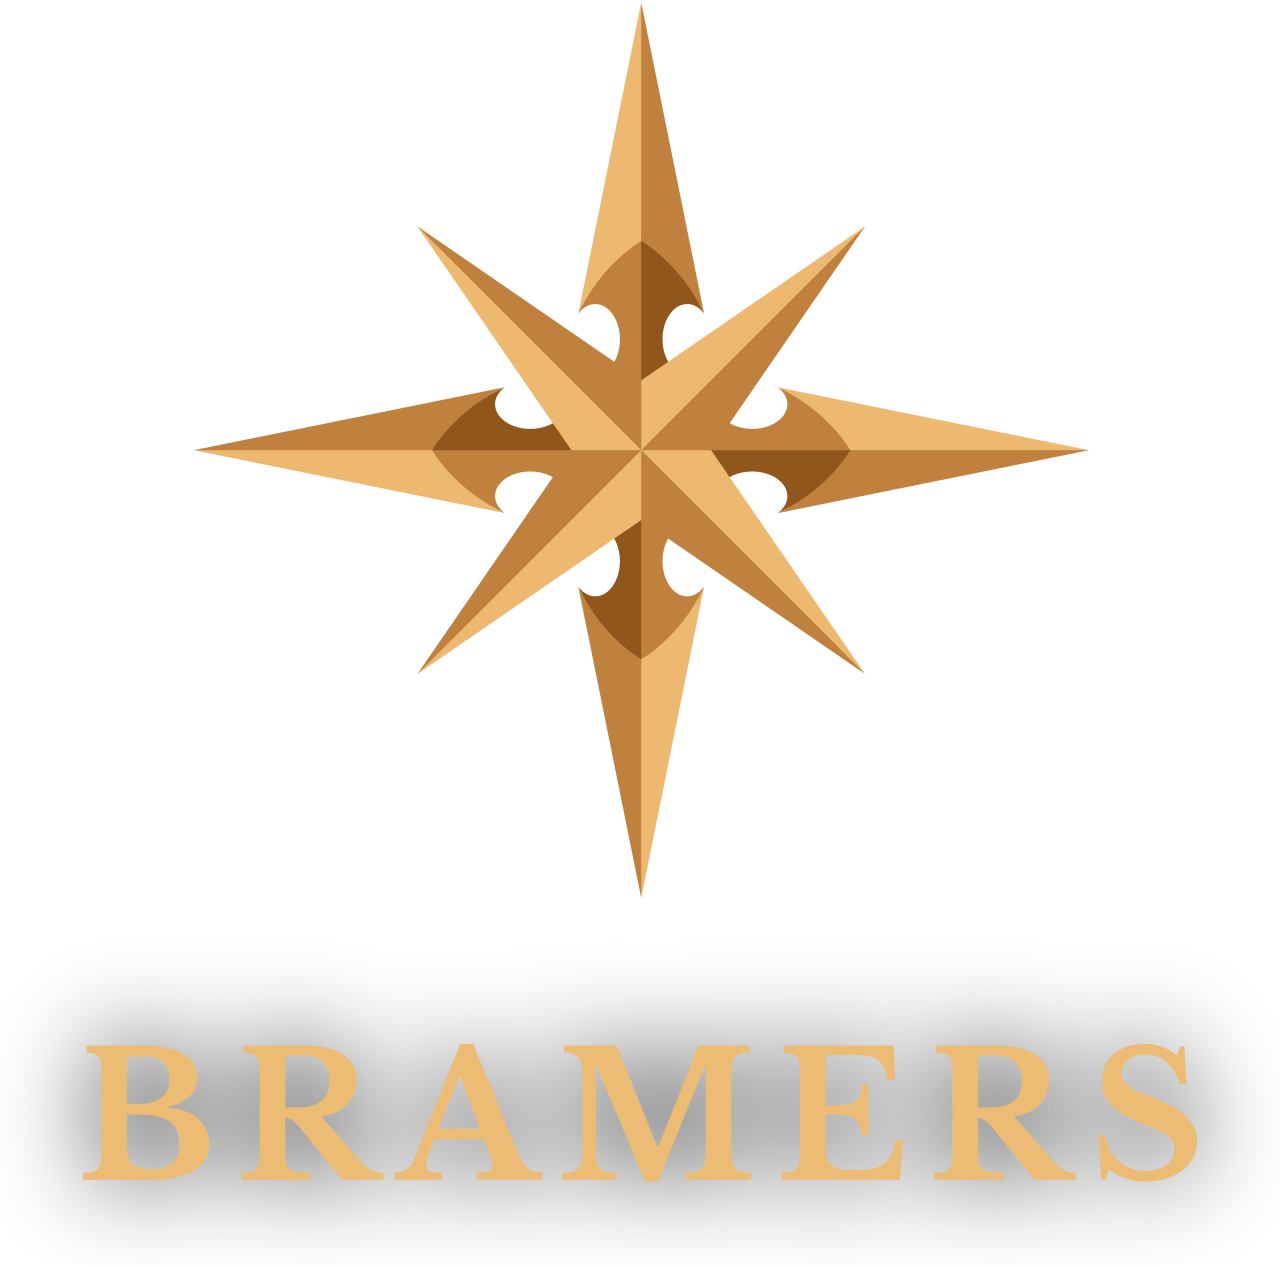 BRAMERS's web page